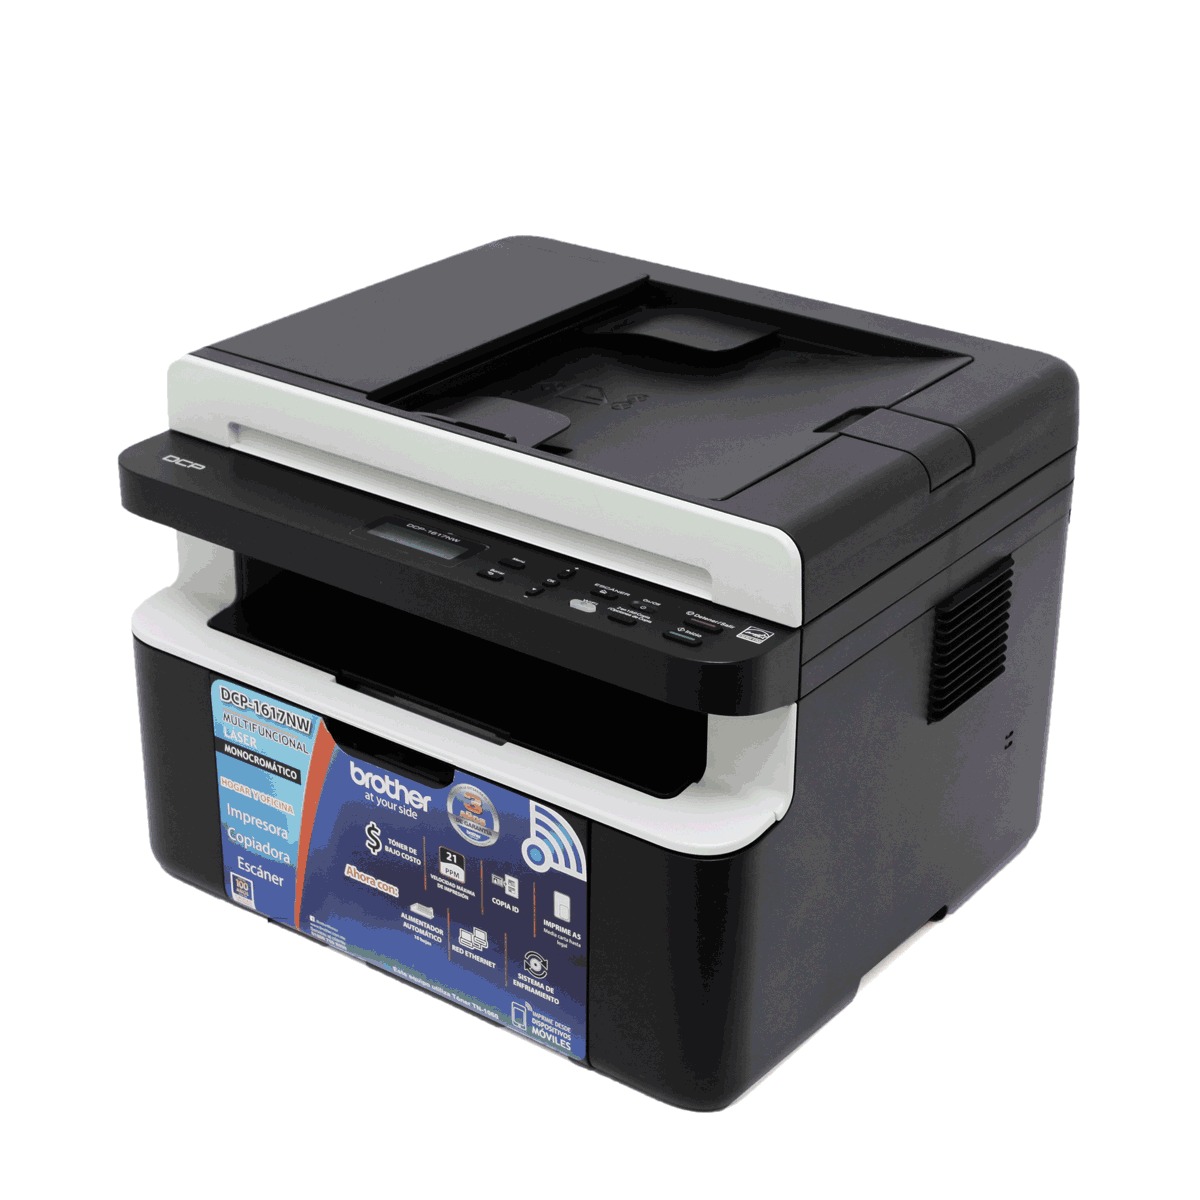 Impresora Multifuncional Brother DCP1617 Láser Blanco y negro WiFi USB